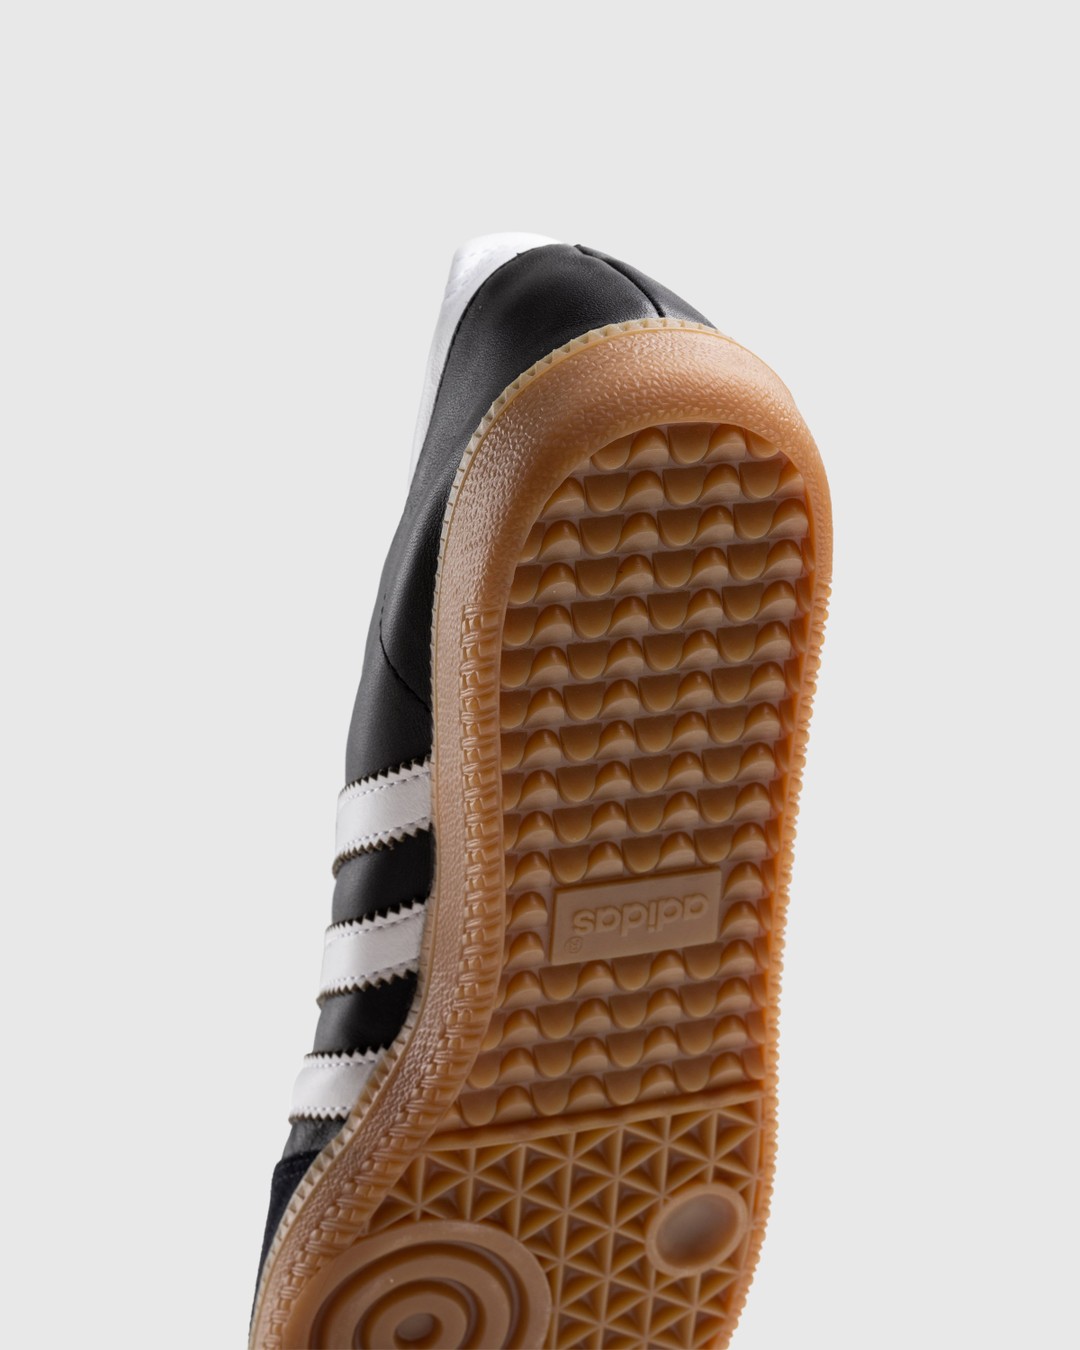 Adidas – Samba Decon Black - Sneakers - Black - Image 6